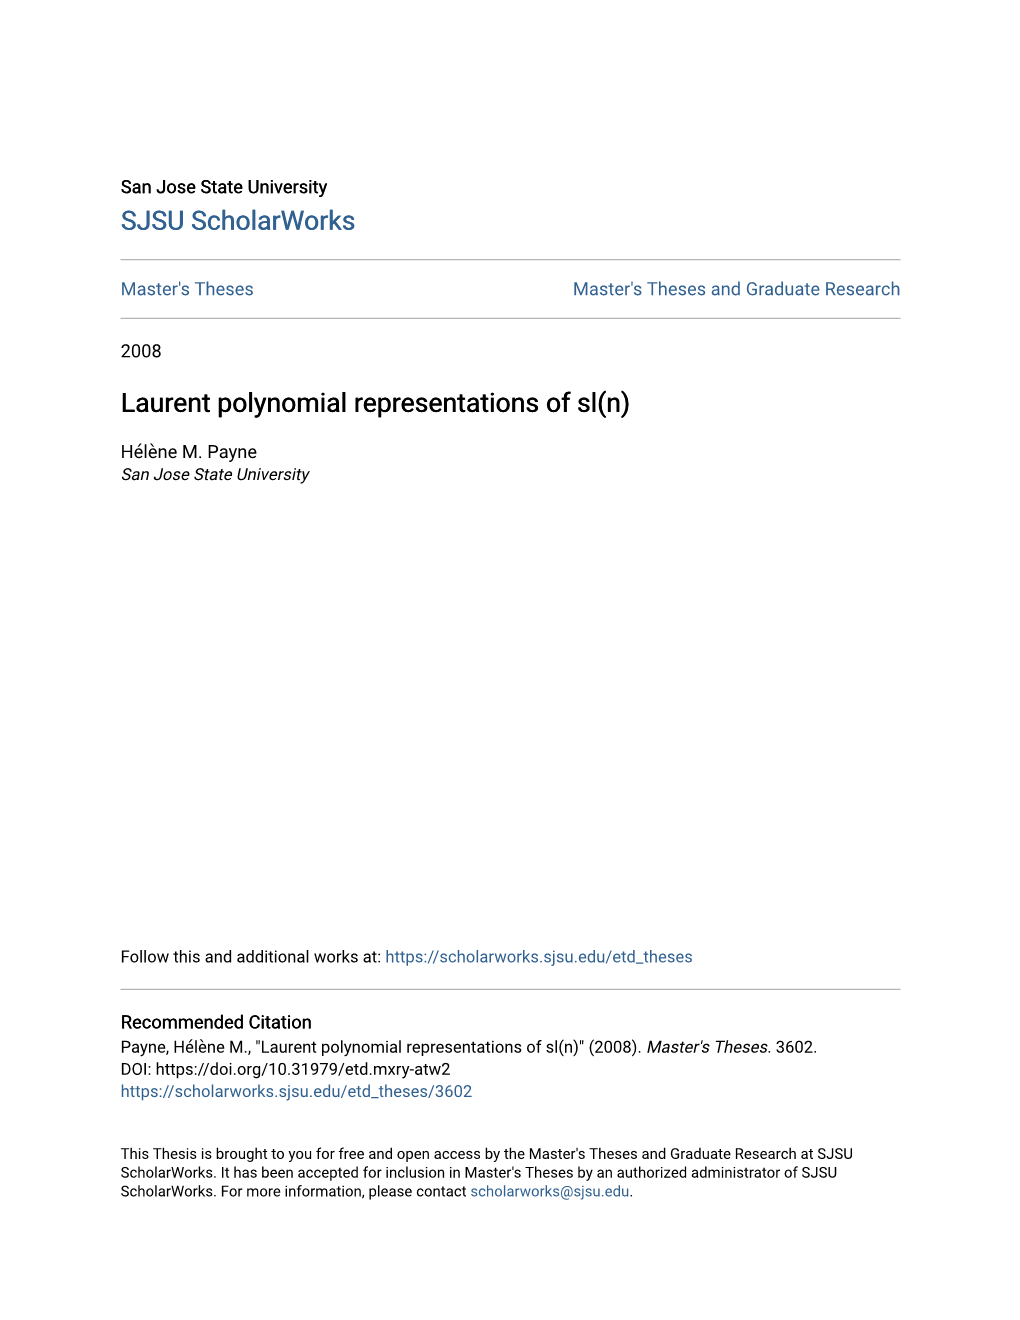 Laurent Polynomial Representations of Sl(N)